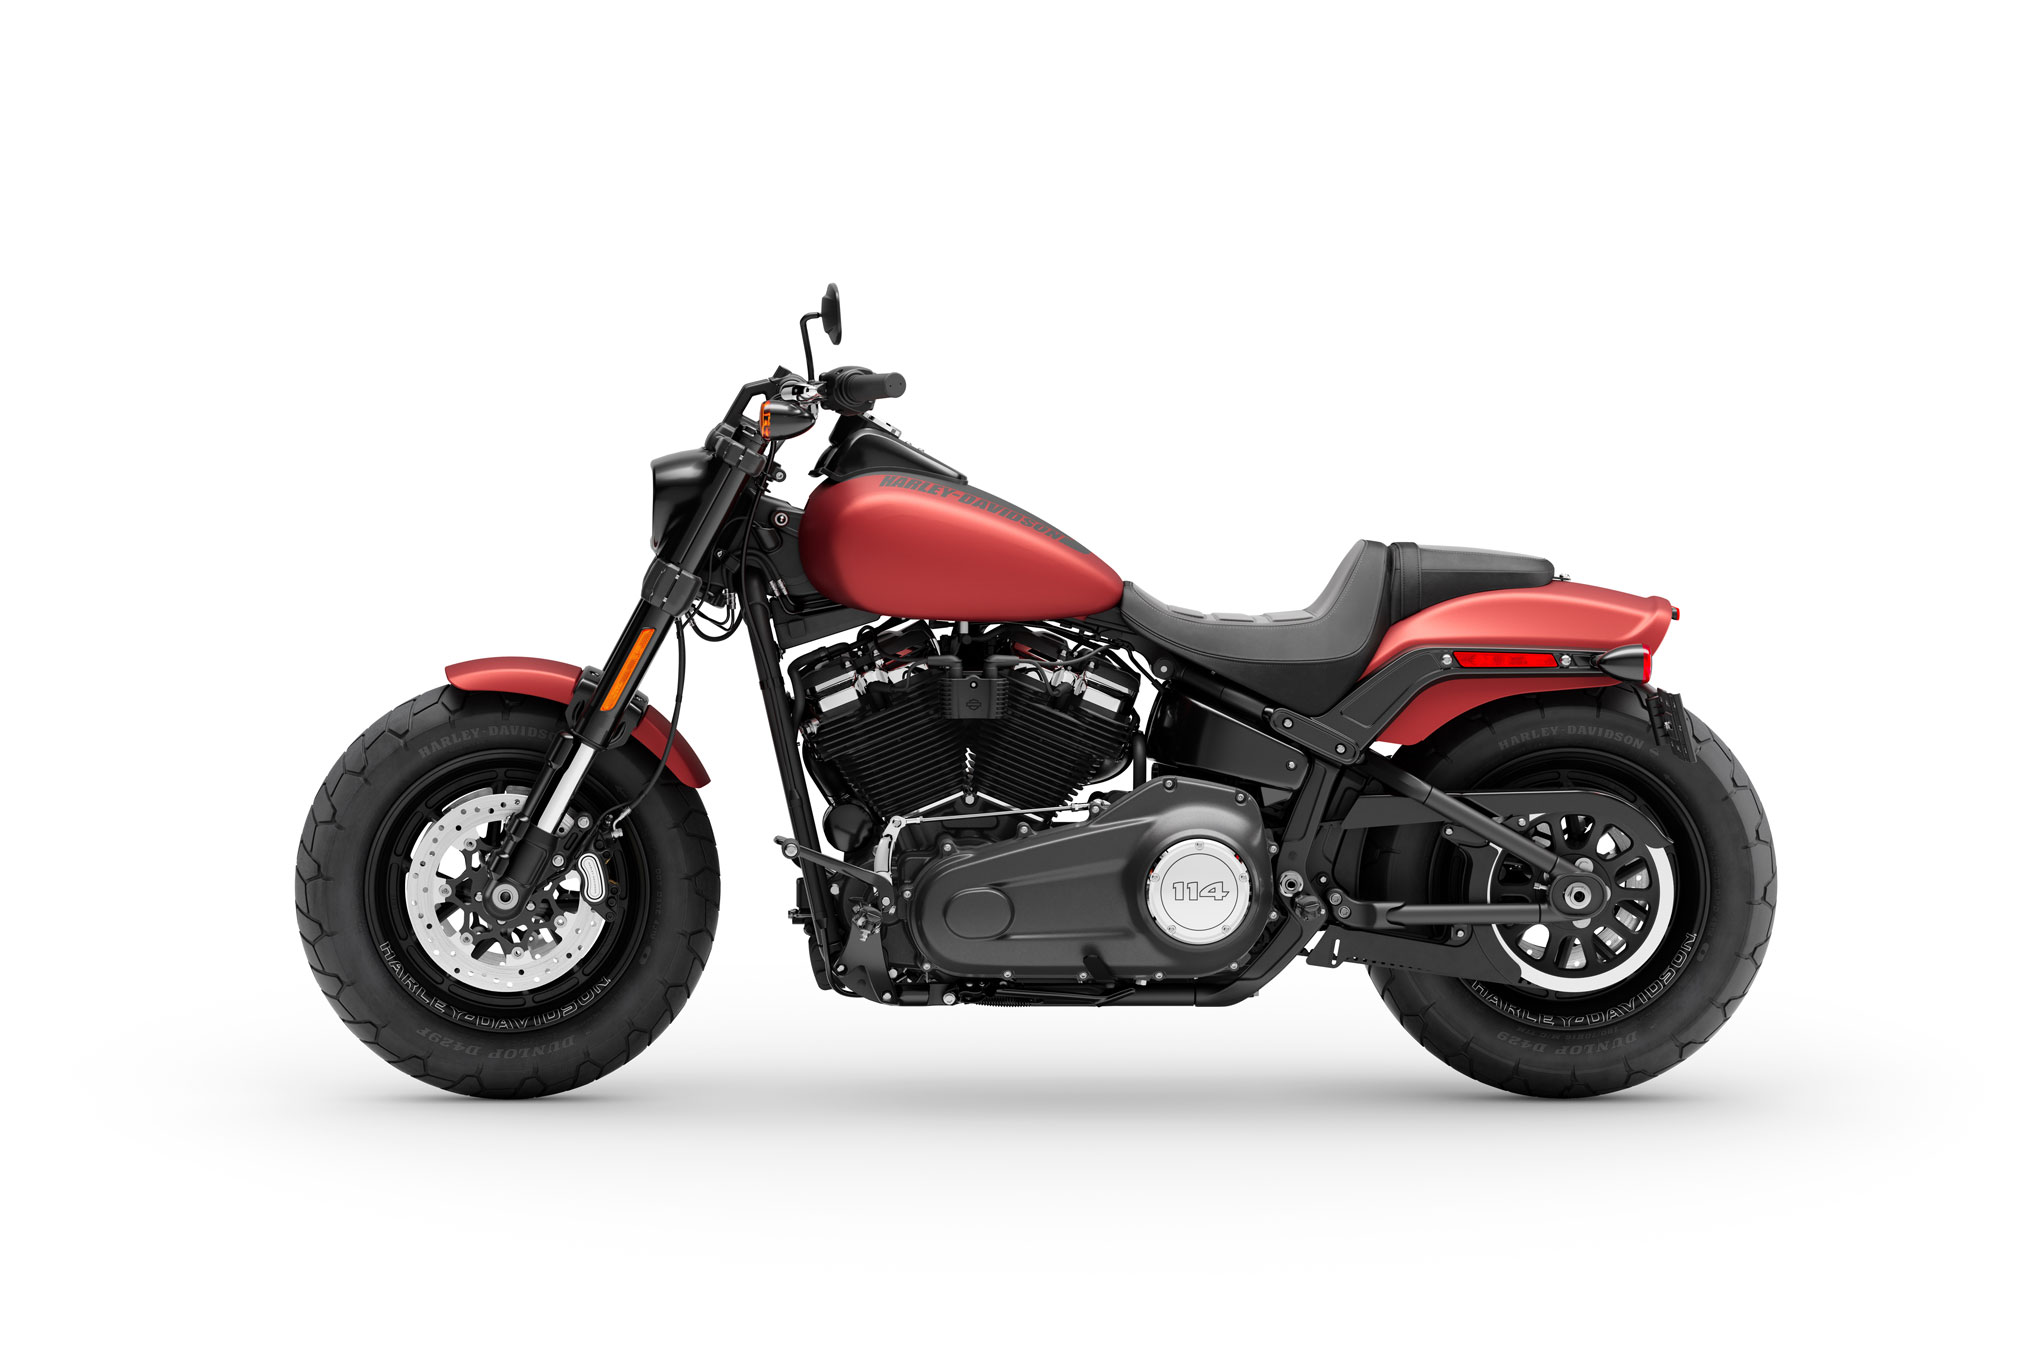 2020 Harley Davidson Fat Bob 114 Guide Total Motorcycle